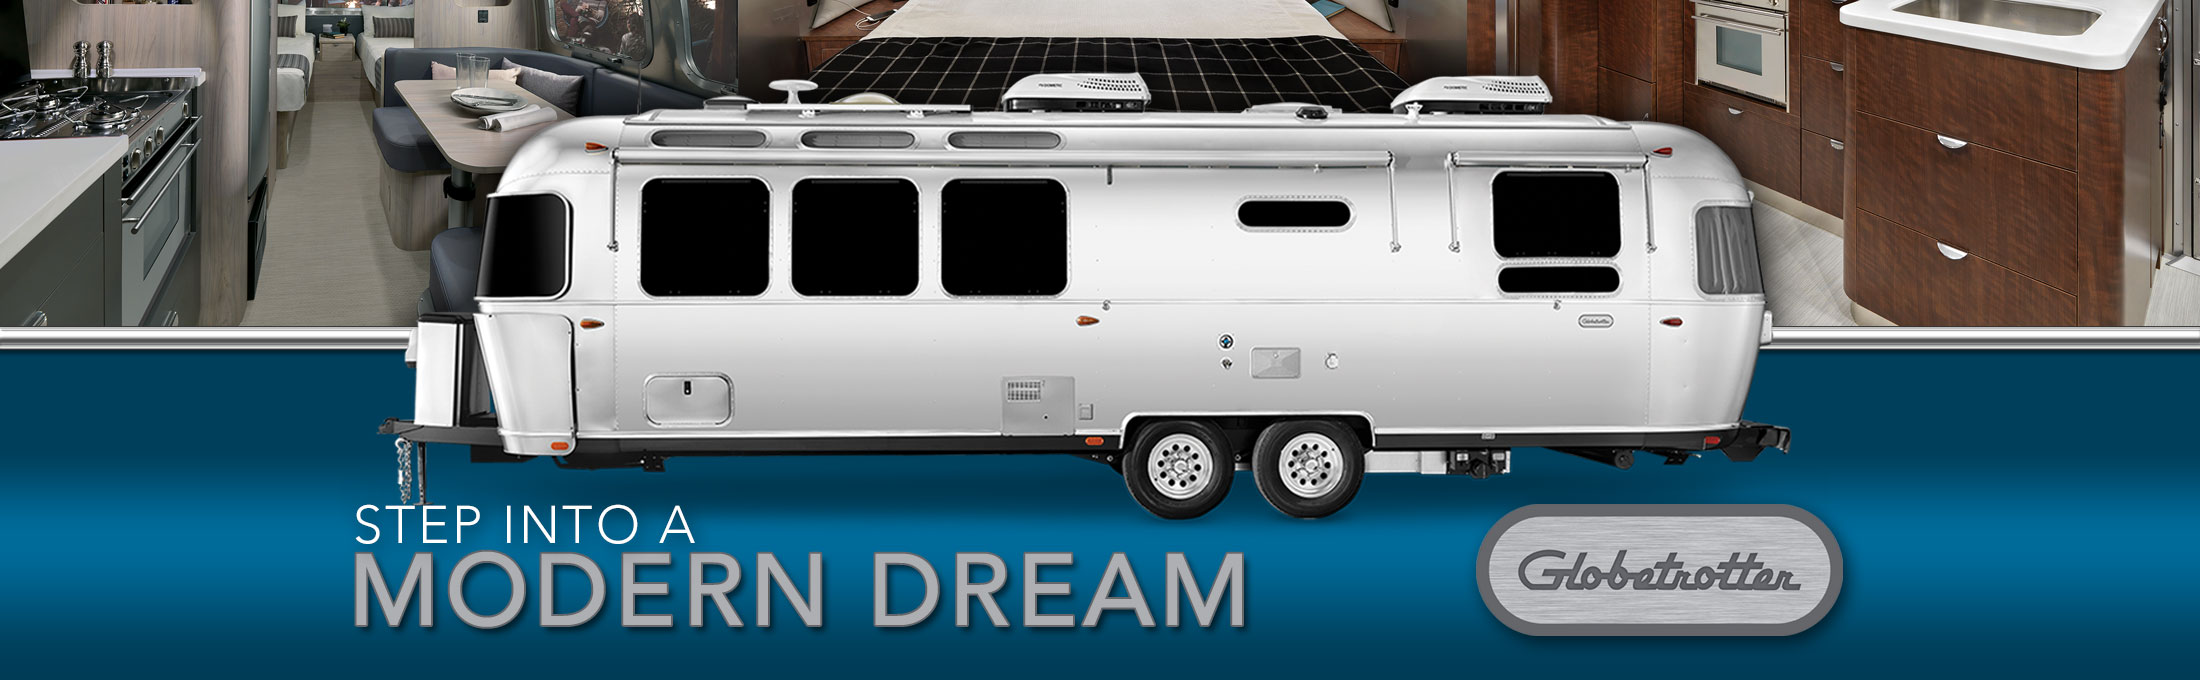 Step Into A Modern Dream
2021 Airstream Globetrotter